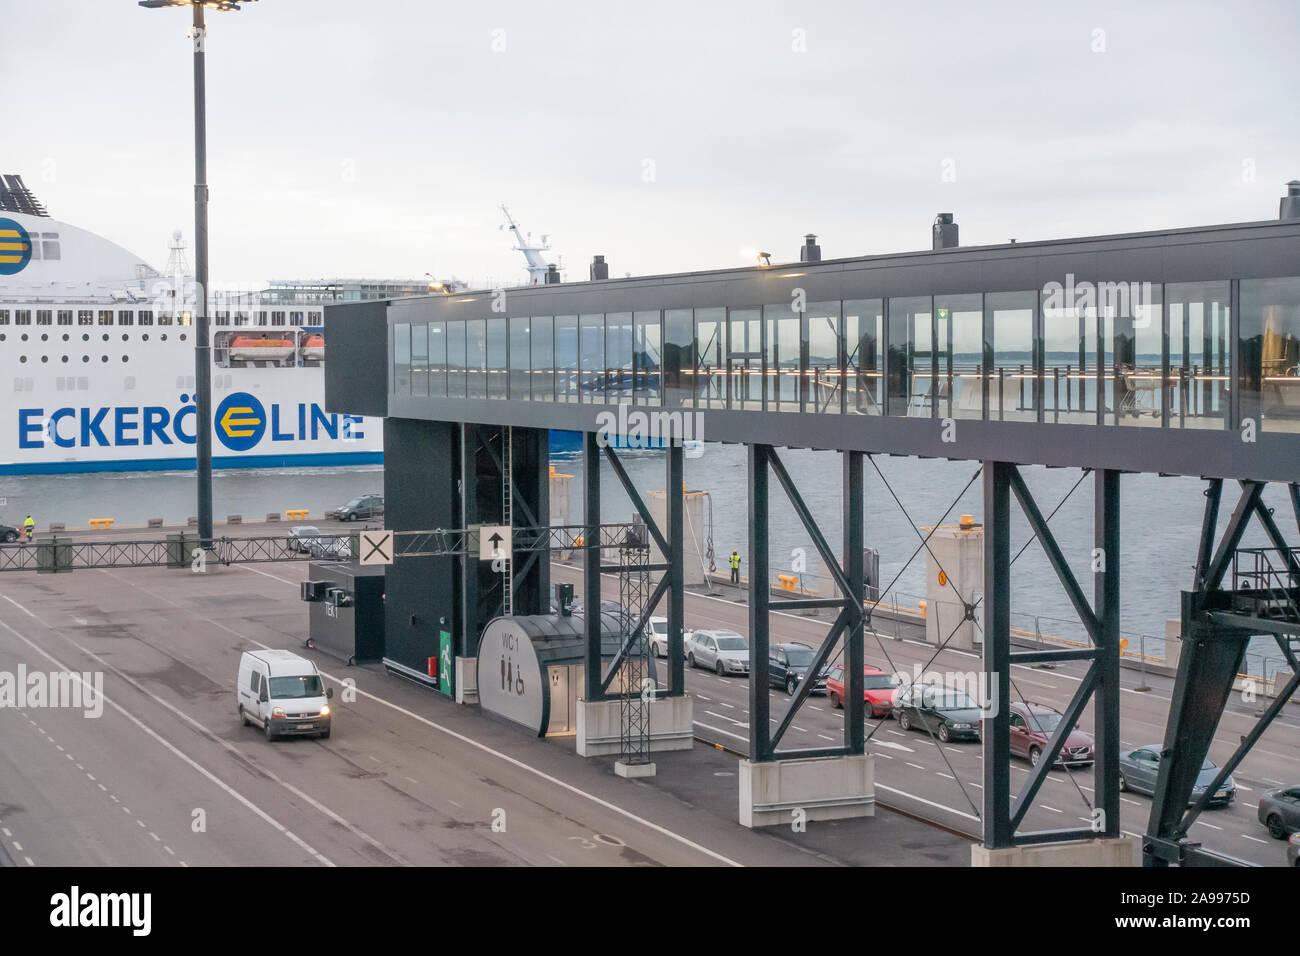 Eckerö line ferry from Tallinn approaching West terminal passenger terminal in Helsinki Finland Stock Photo